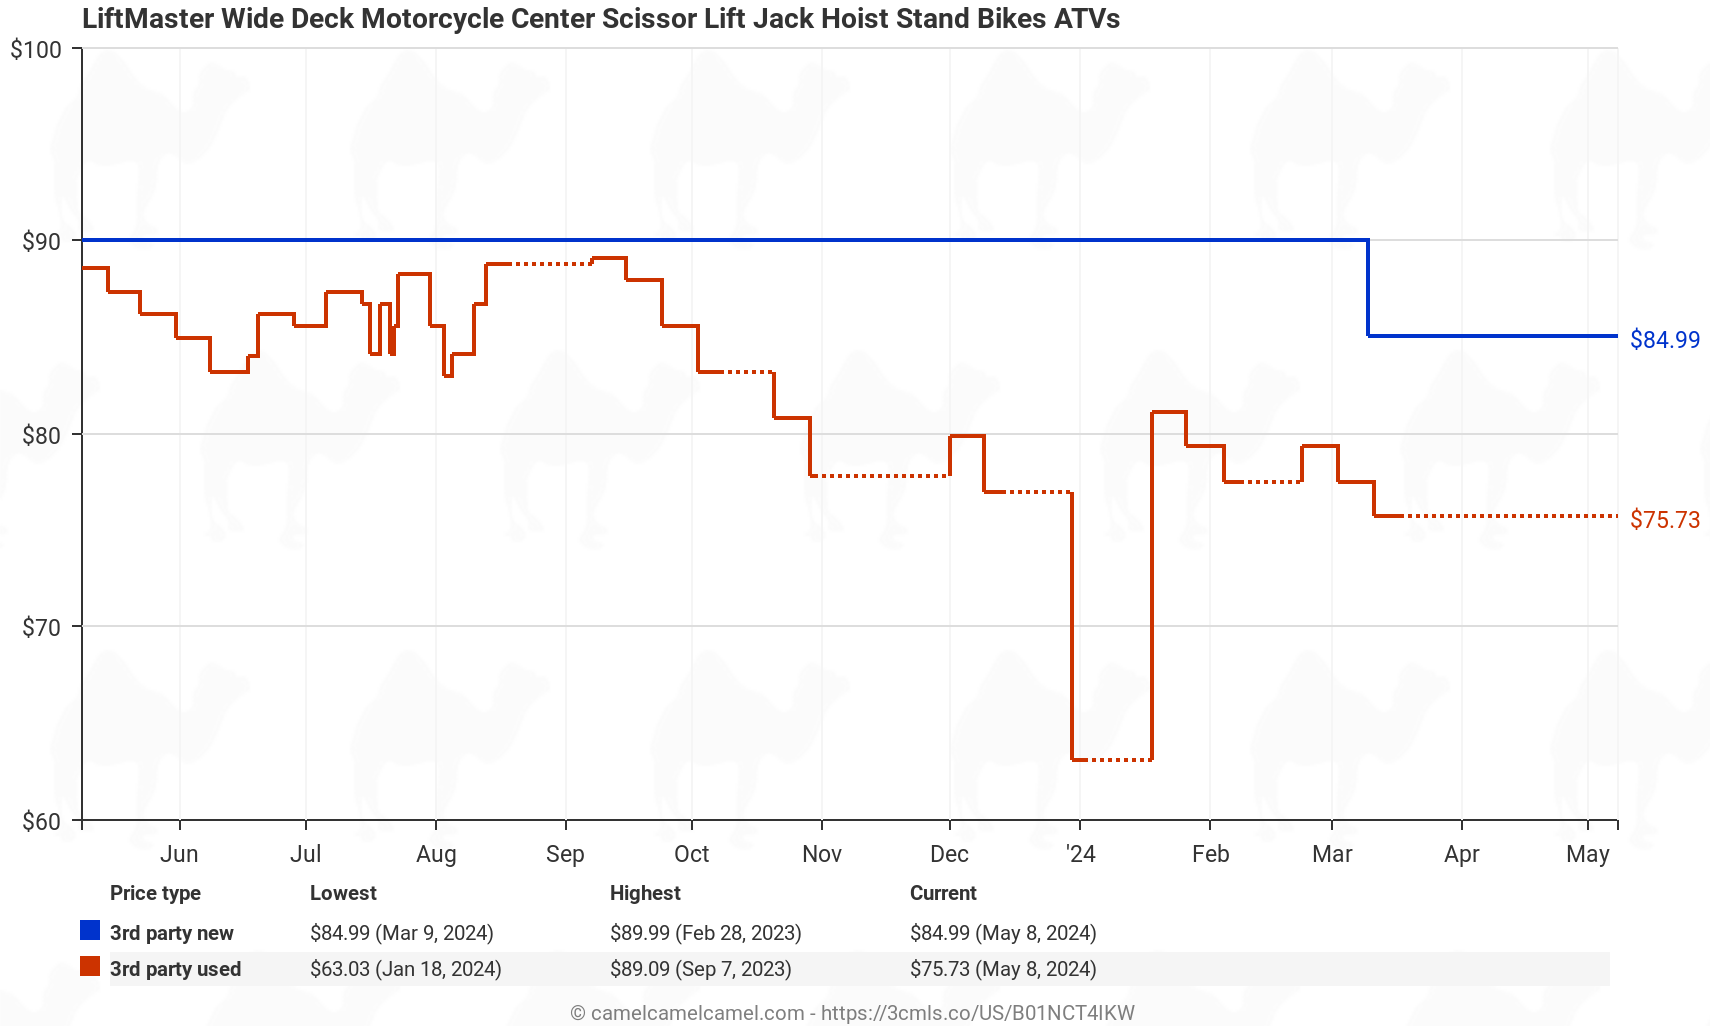 liftmaster Wide Deck Motorcycle Center Scissor Lift Jack Hoist Stand Bikes ATVs - Price History: B01NCT4IKW